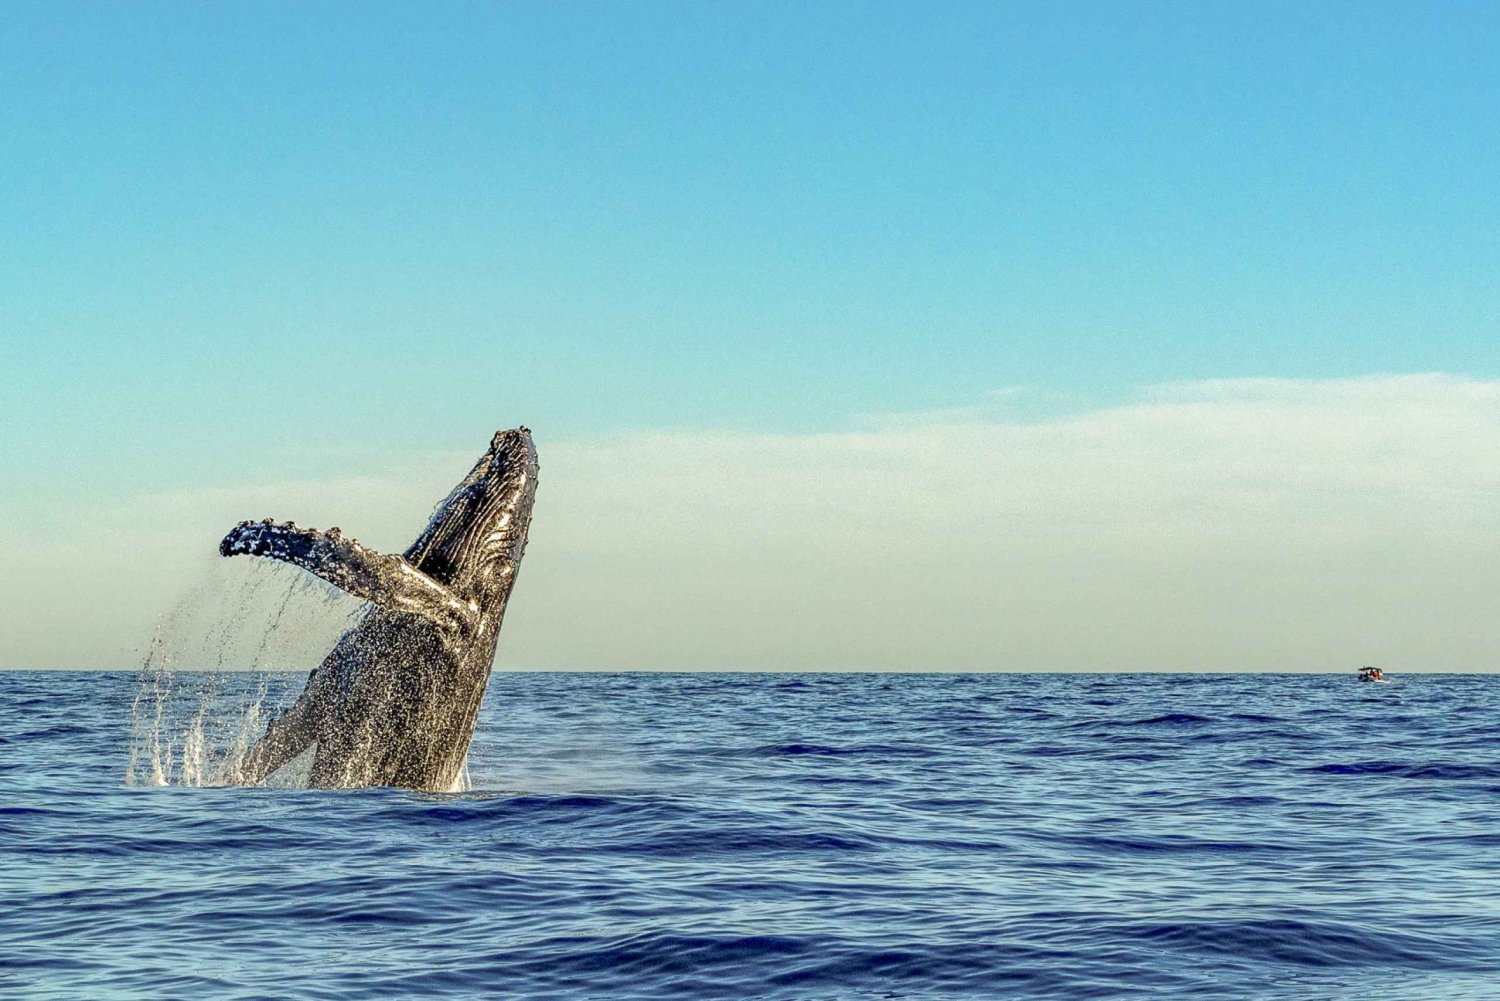 Kailua-Kona: Whale Watching Cruise